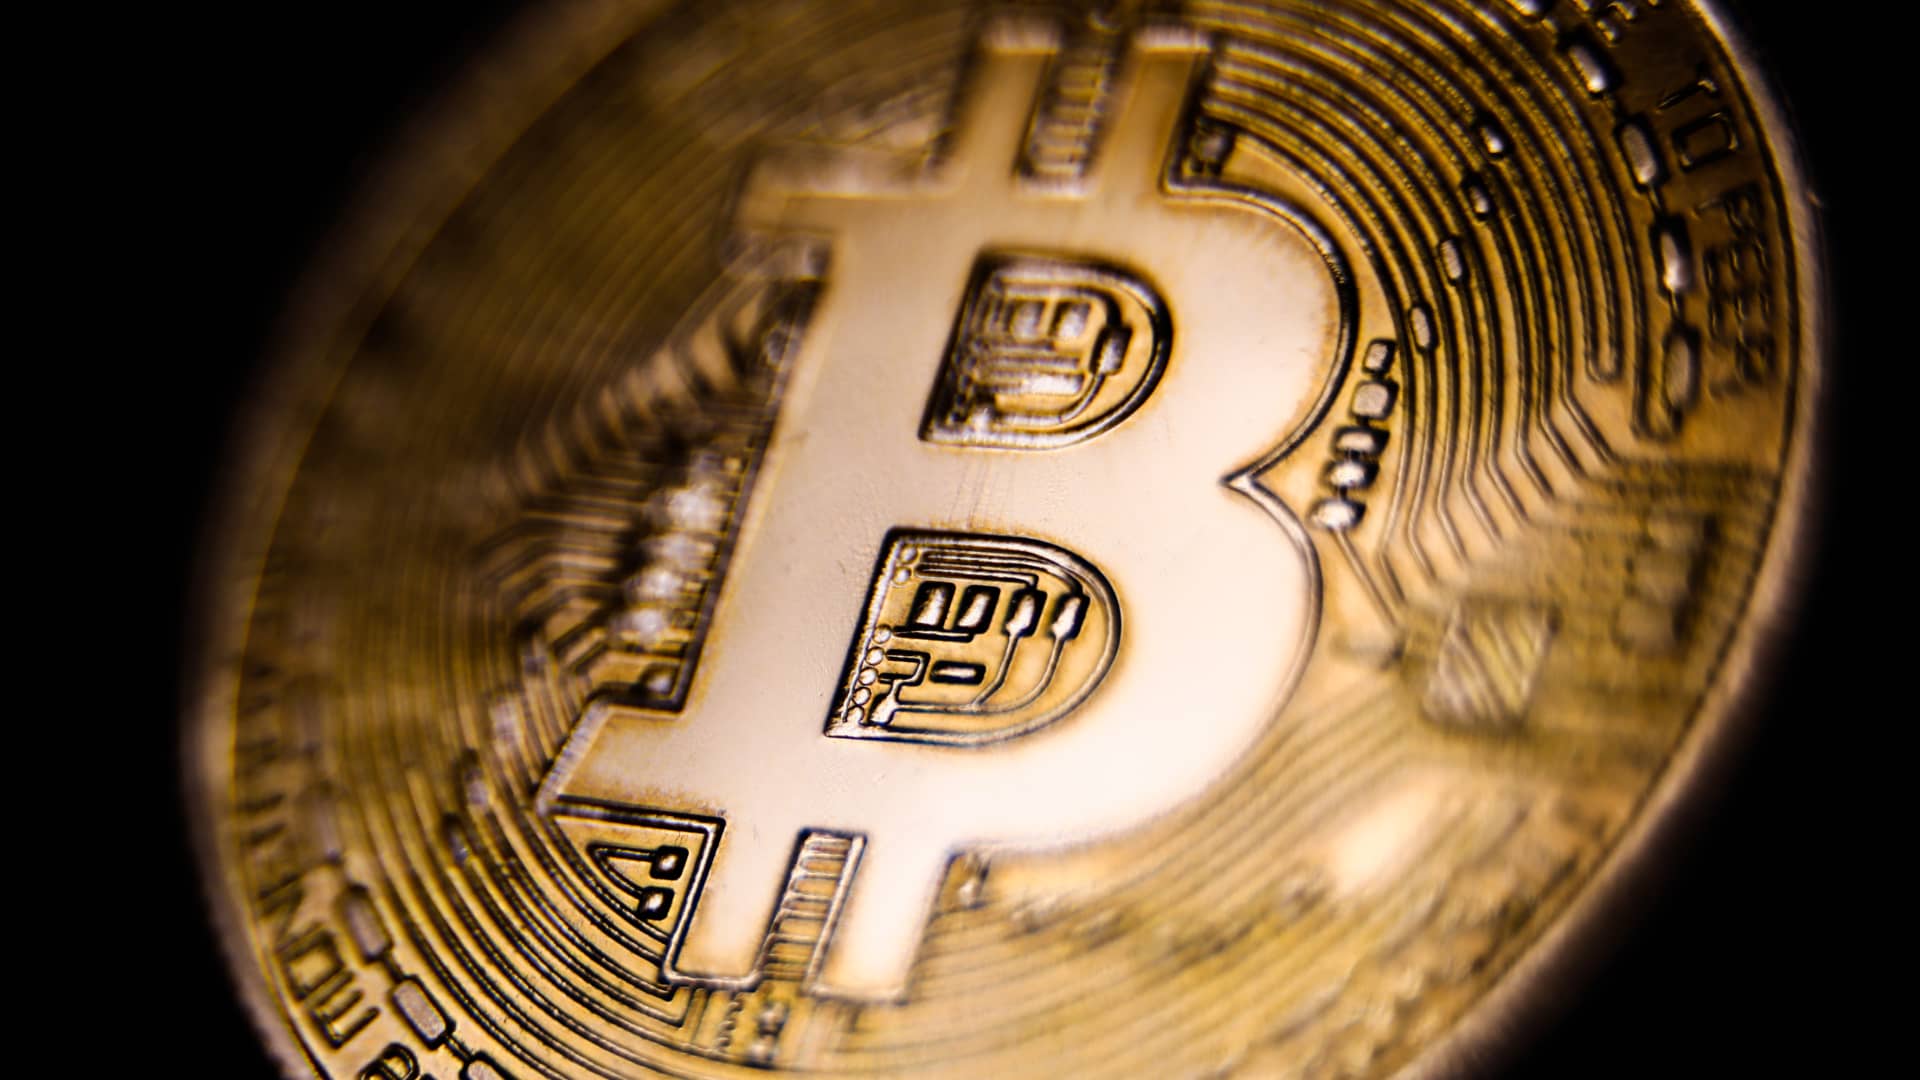 Bitcoin falls below $ 35,000 over the weekend, extending Friday’s loss